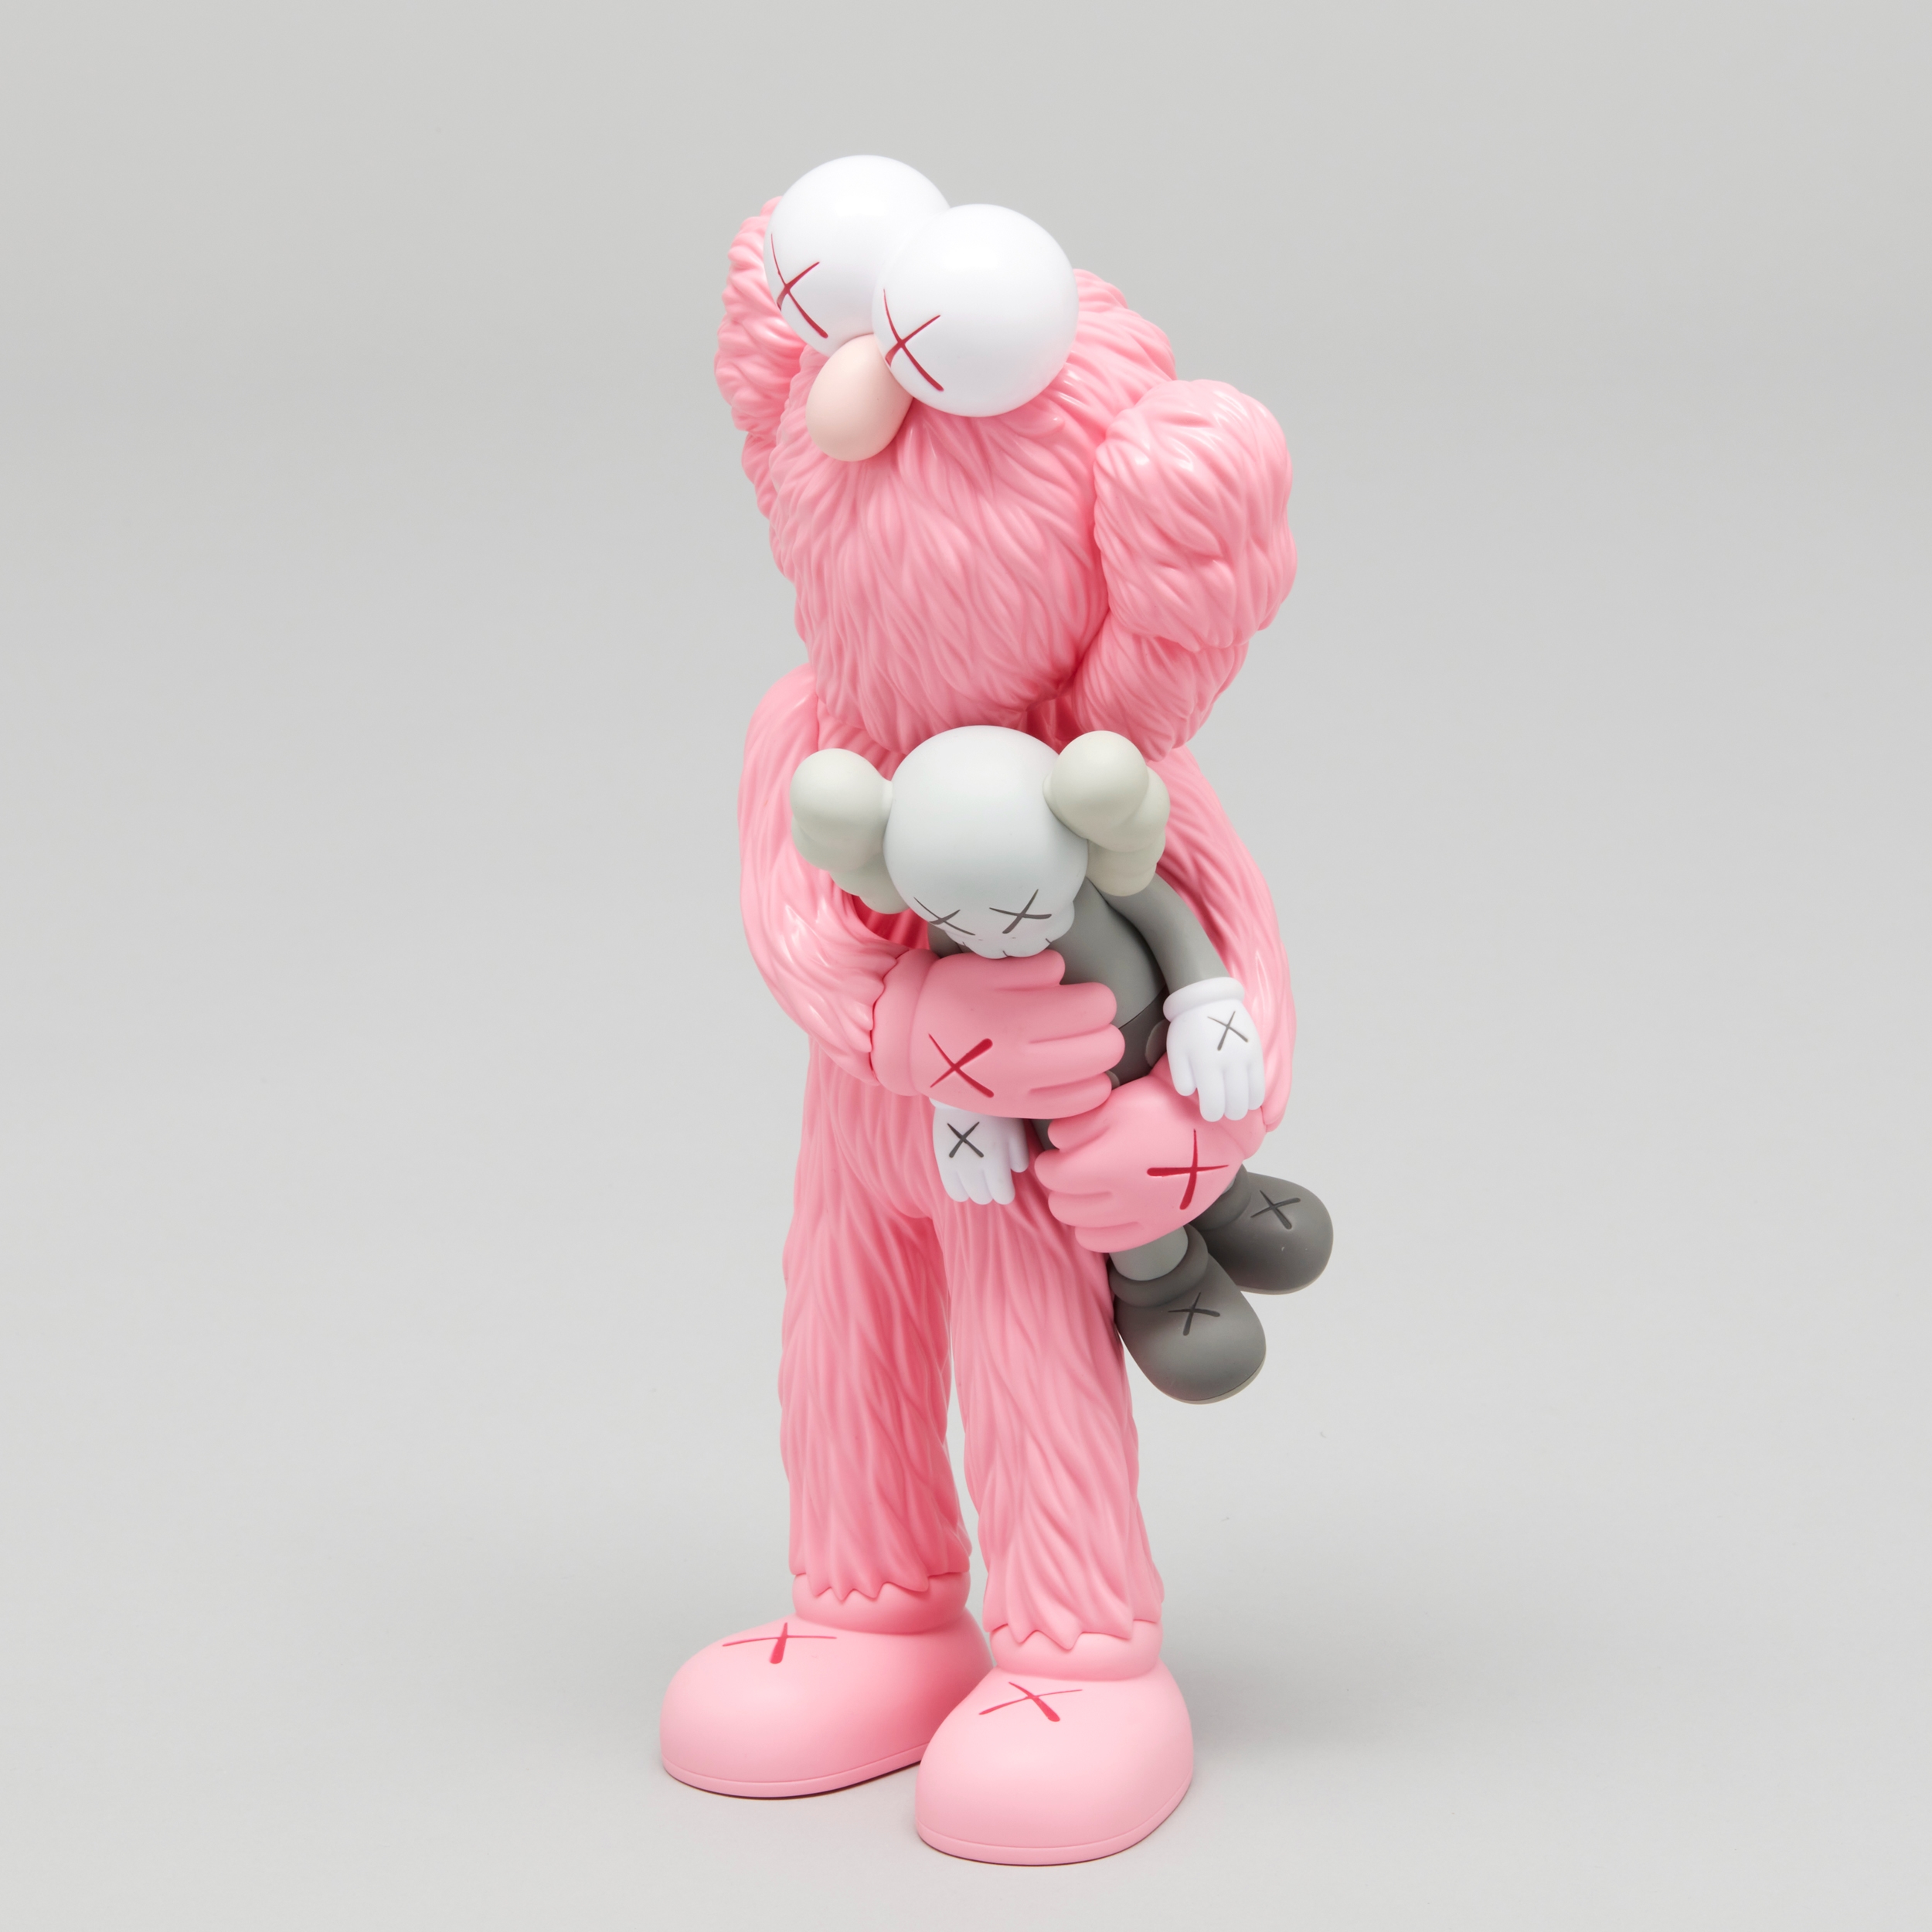 KAWS | KAWS TAKE Pink (2020) | Available for Sale | Artsy